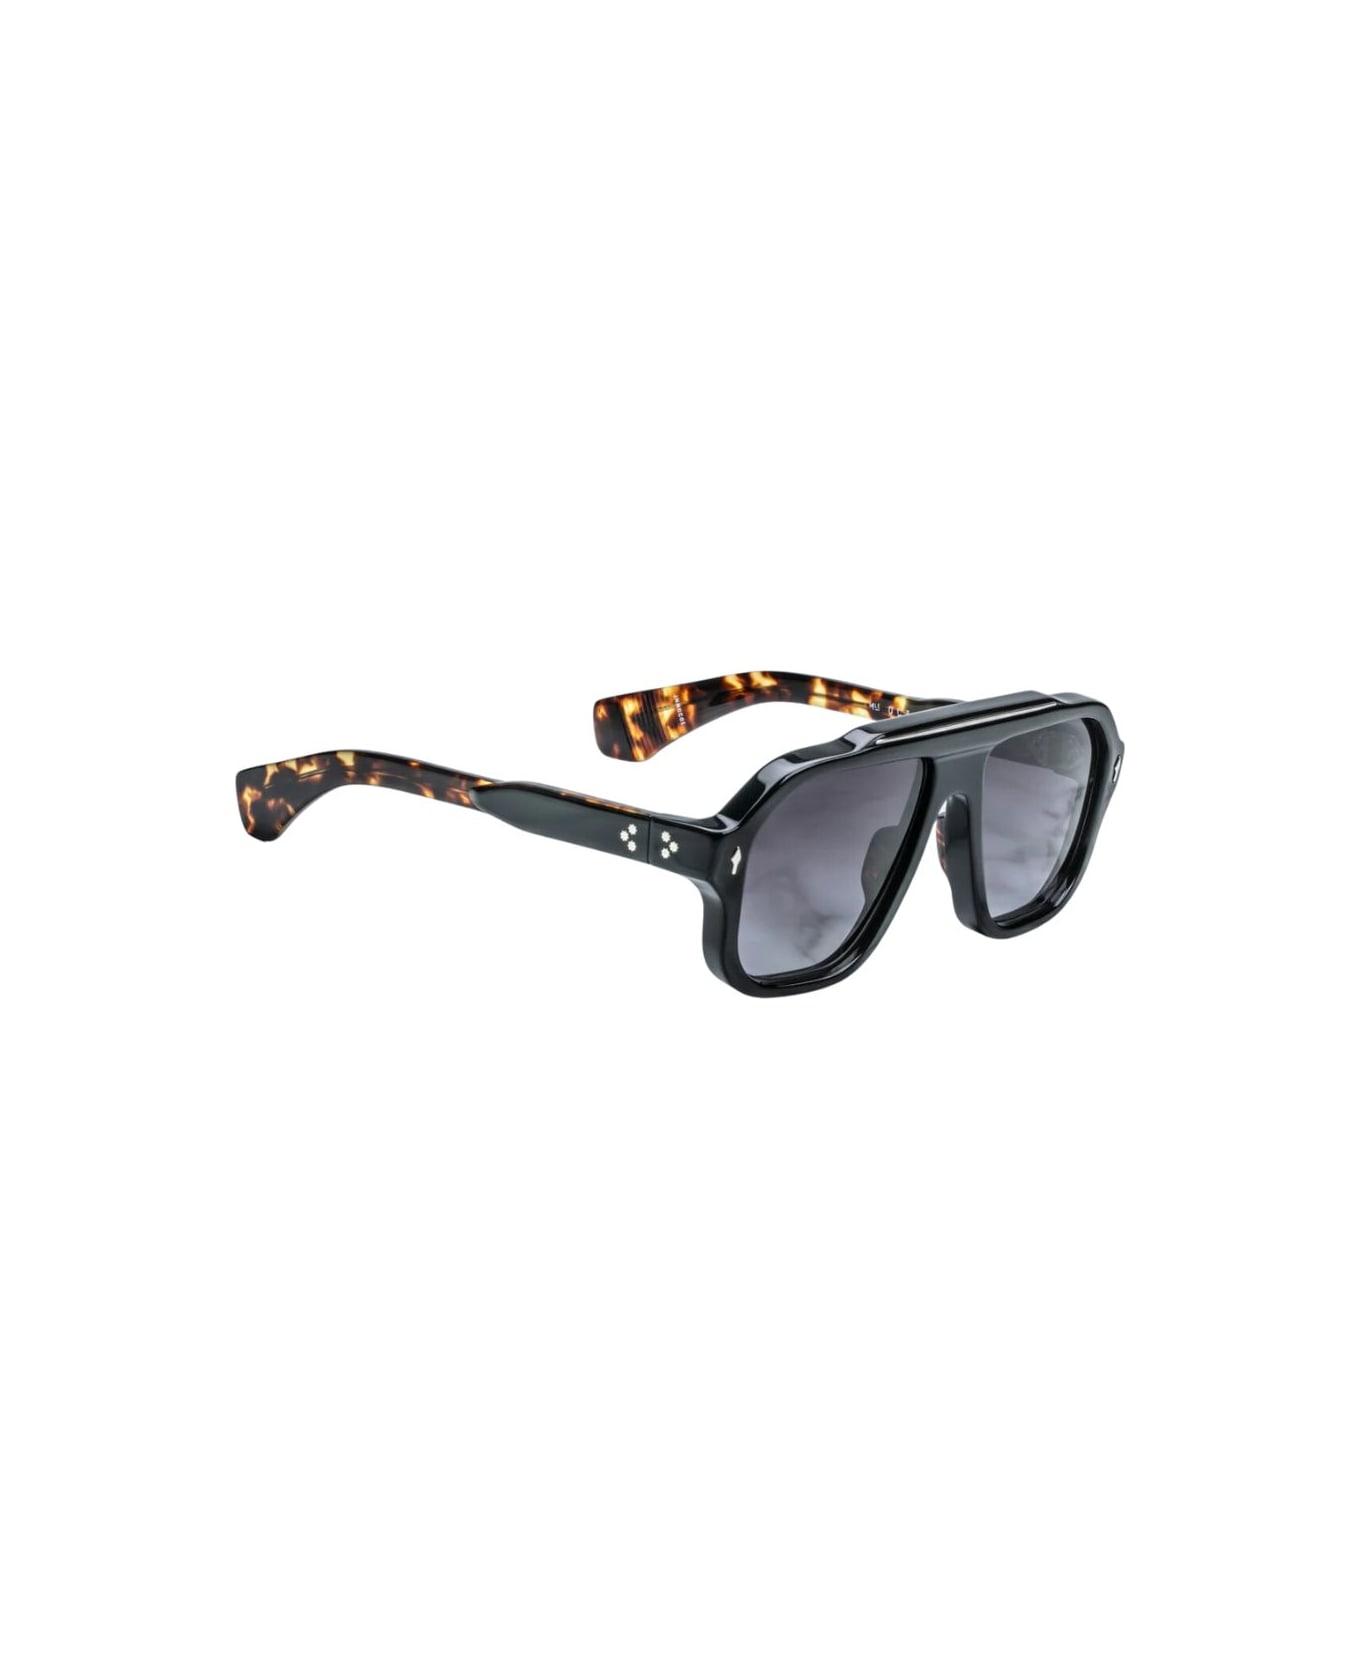 Jacques Marie Mage Octavian Sunglasses - Black